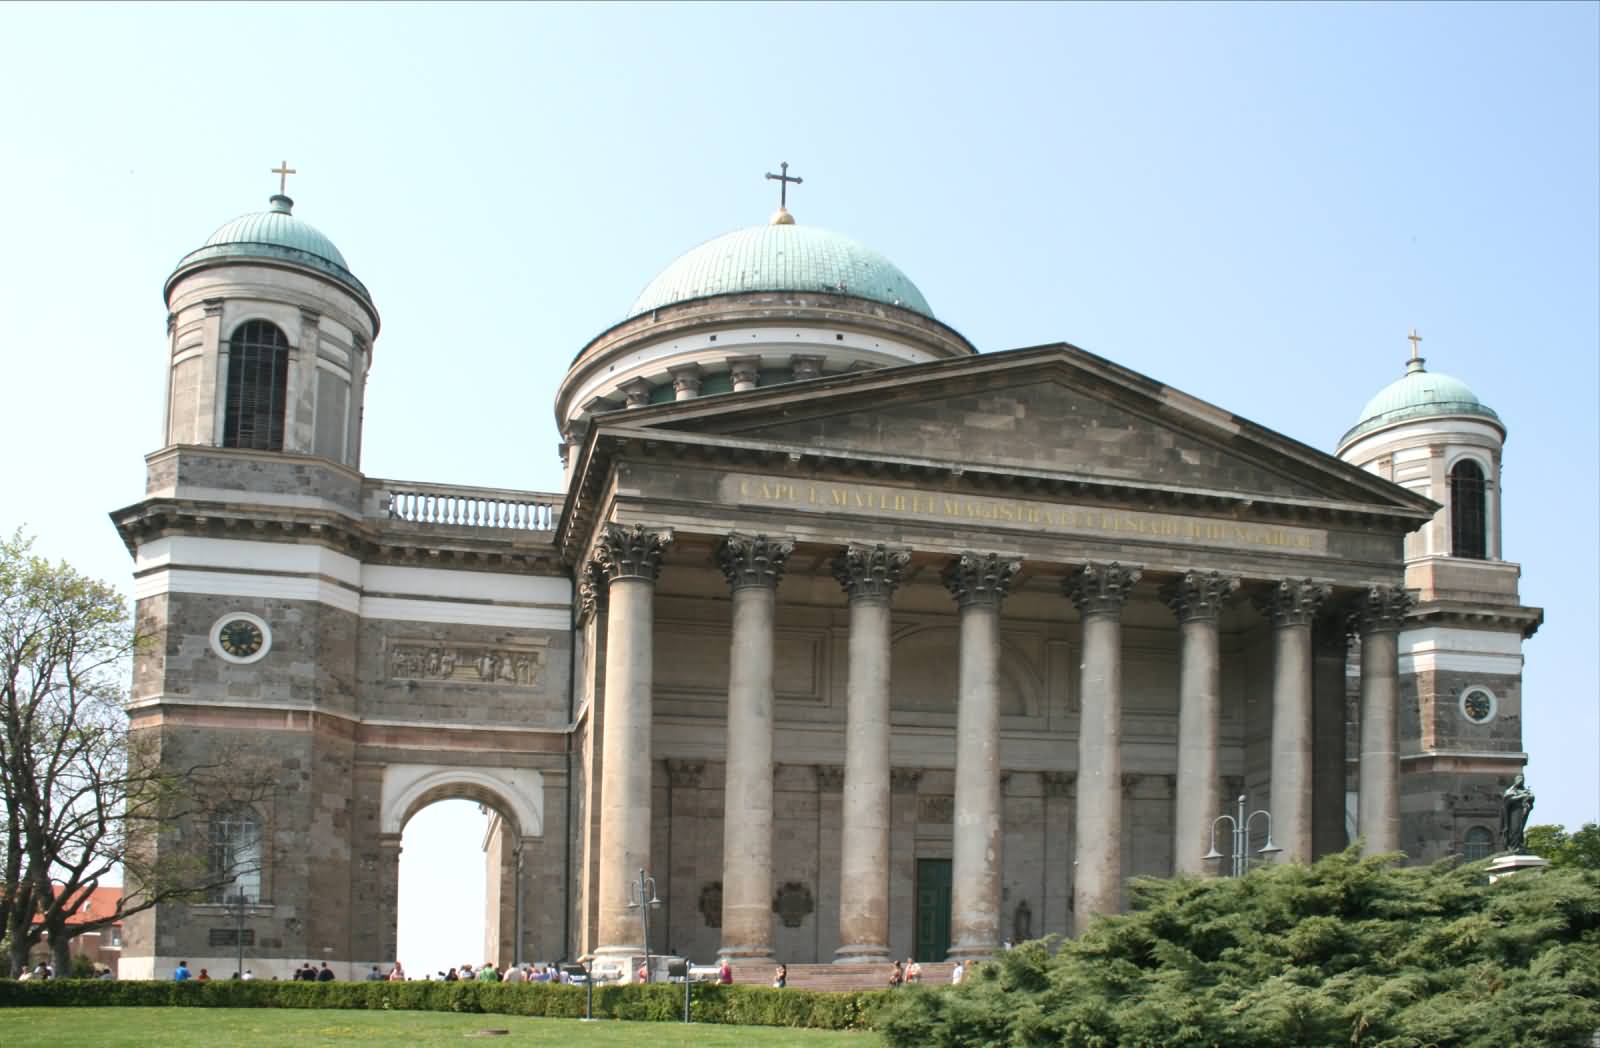 Esztergom Basilica In Hungary